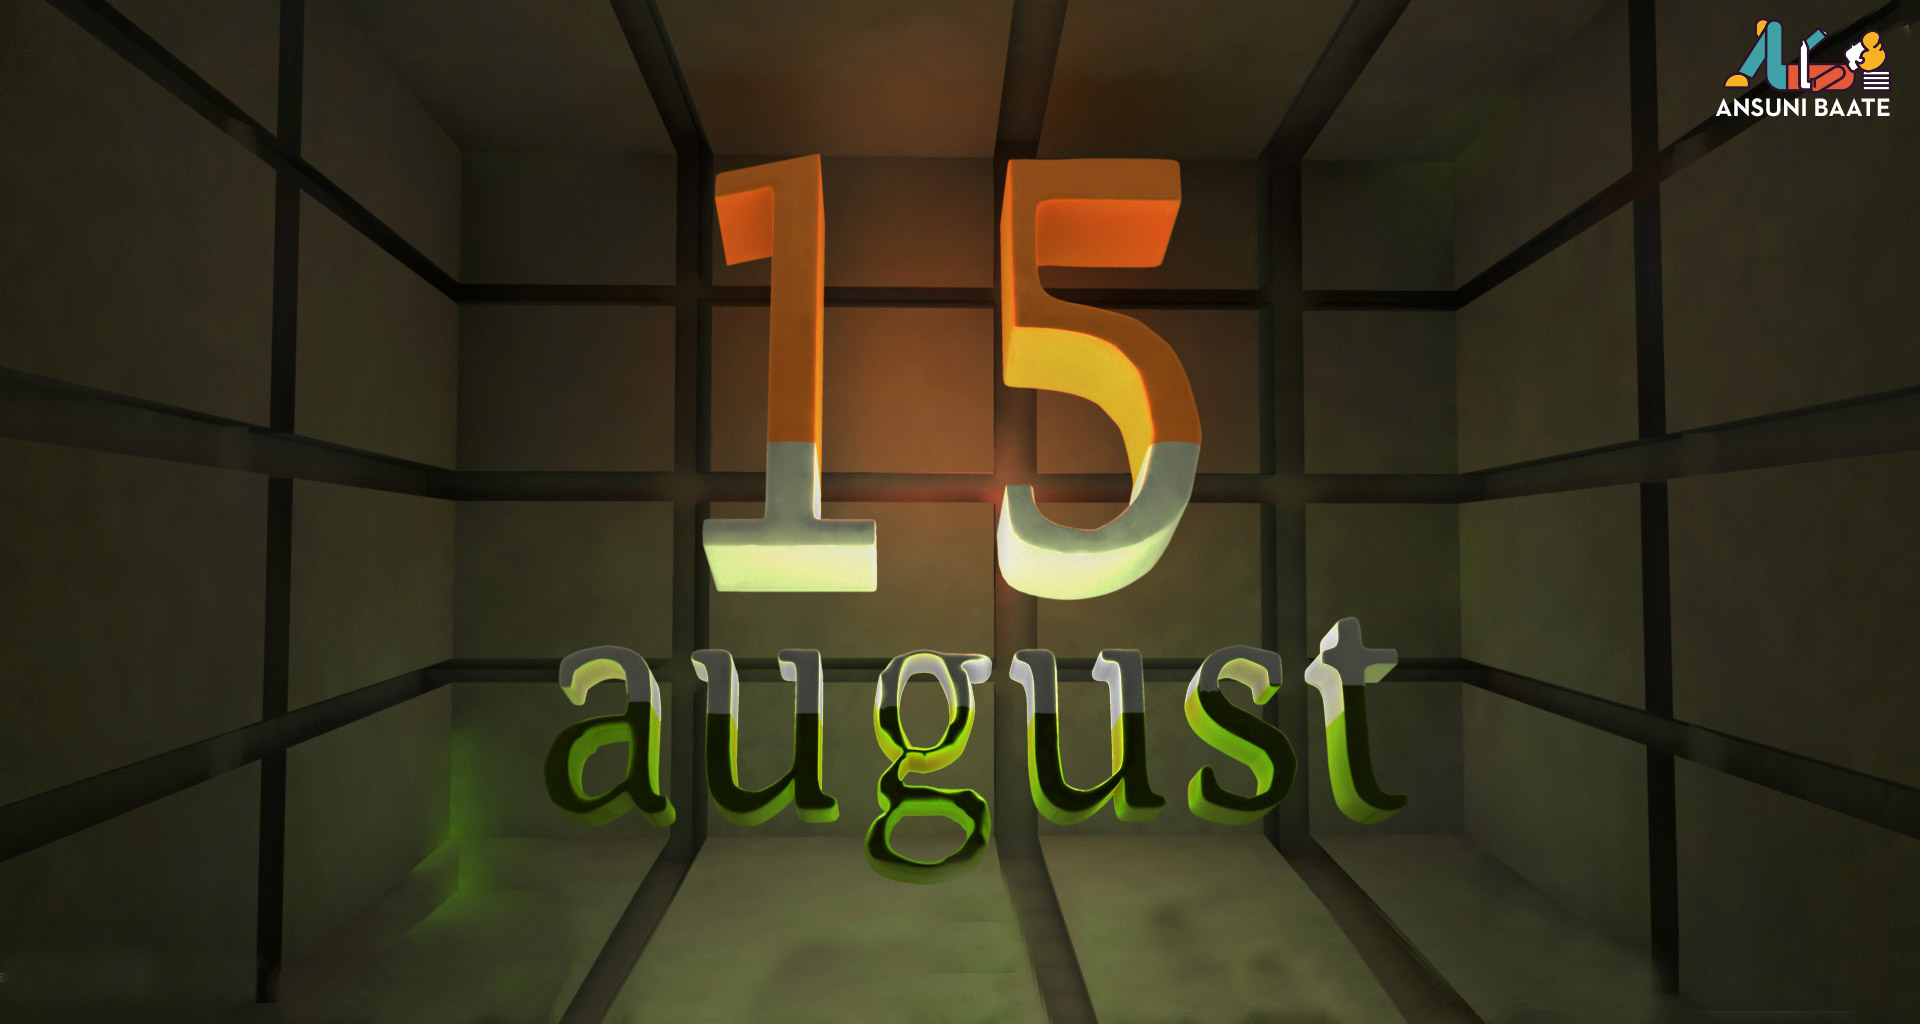 pandra august wallpaper,adventure game,logo,graphics,font,animation